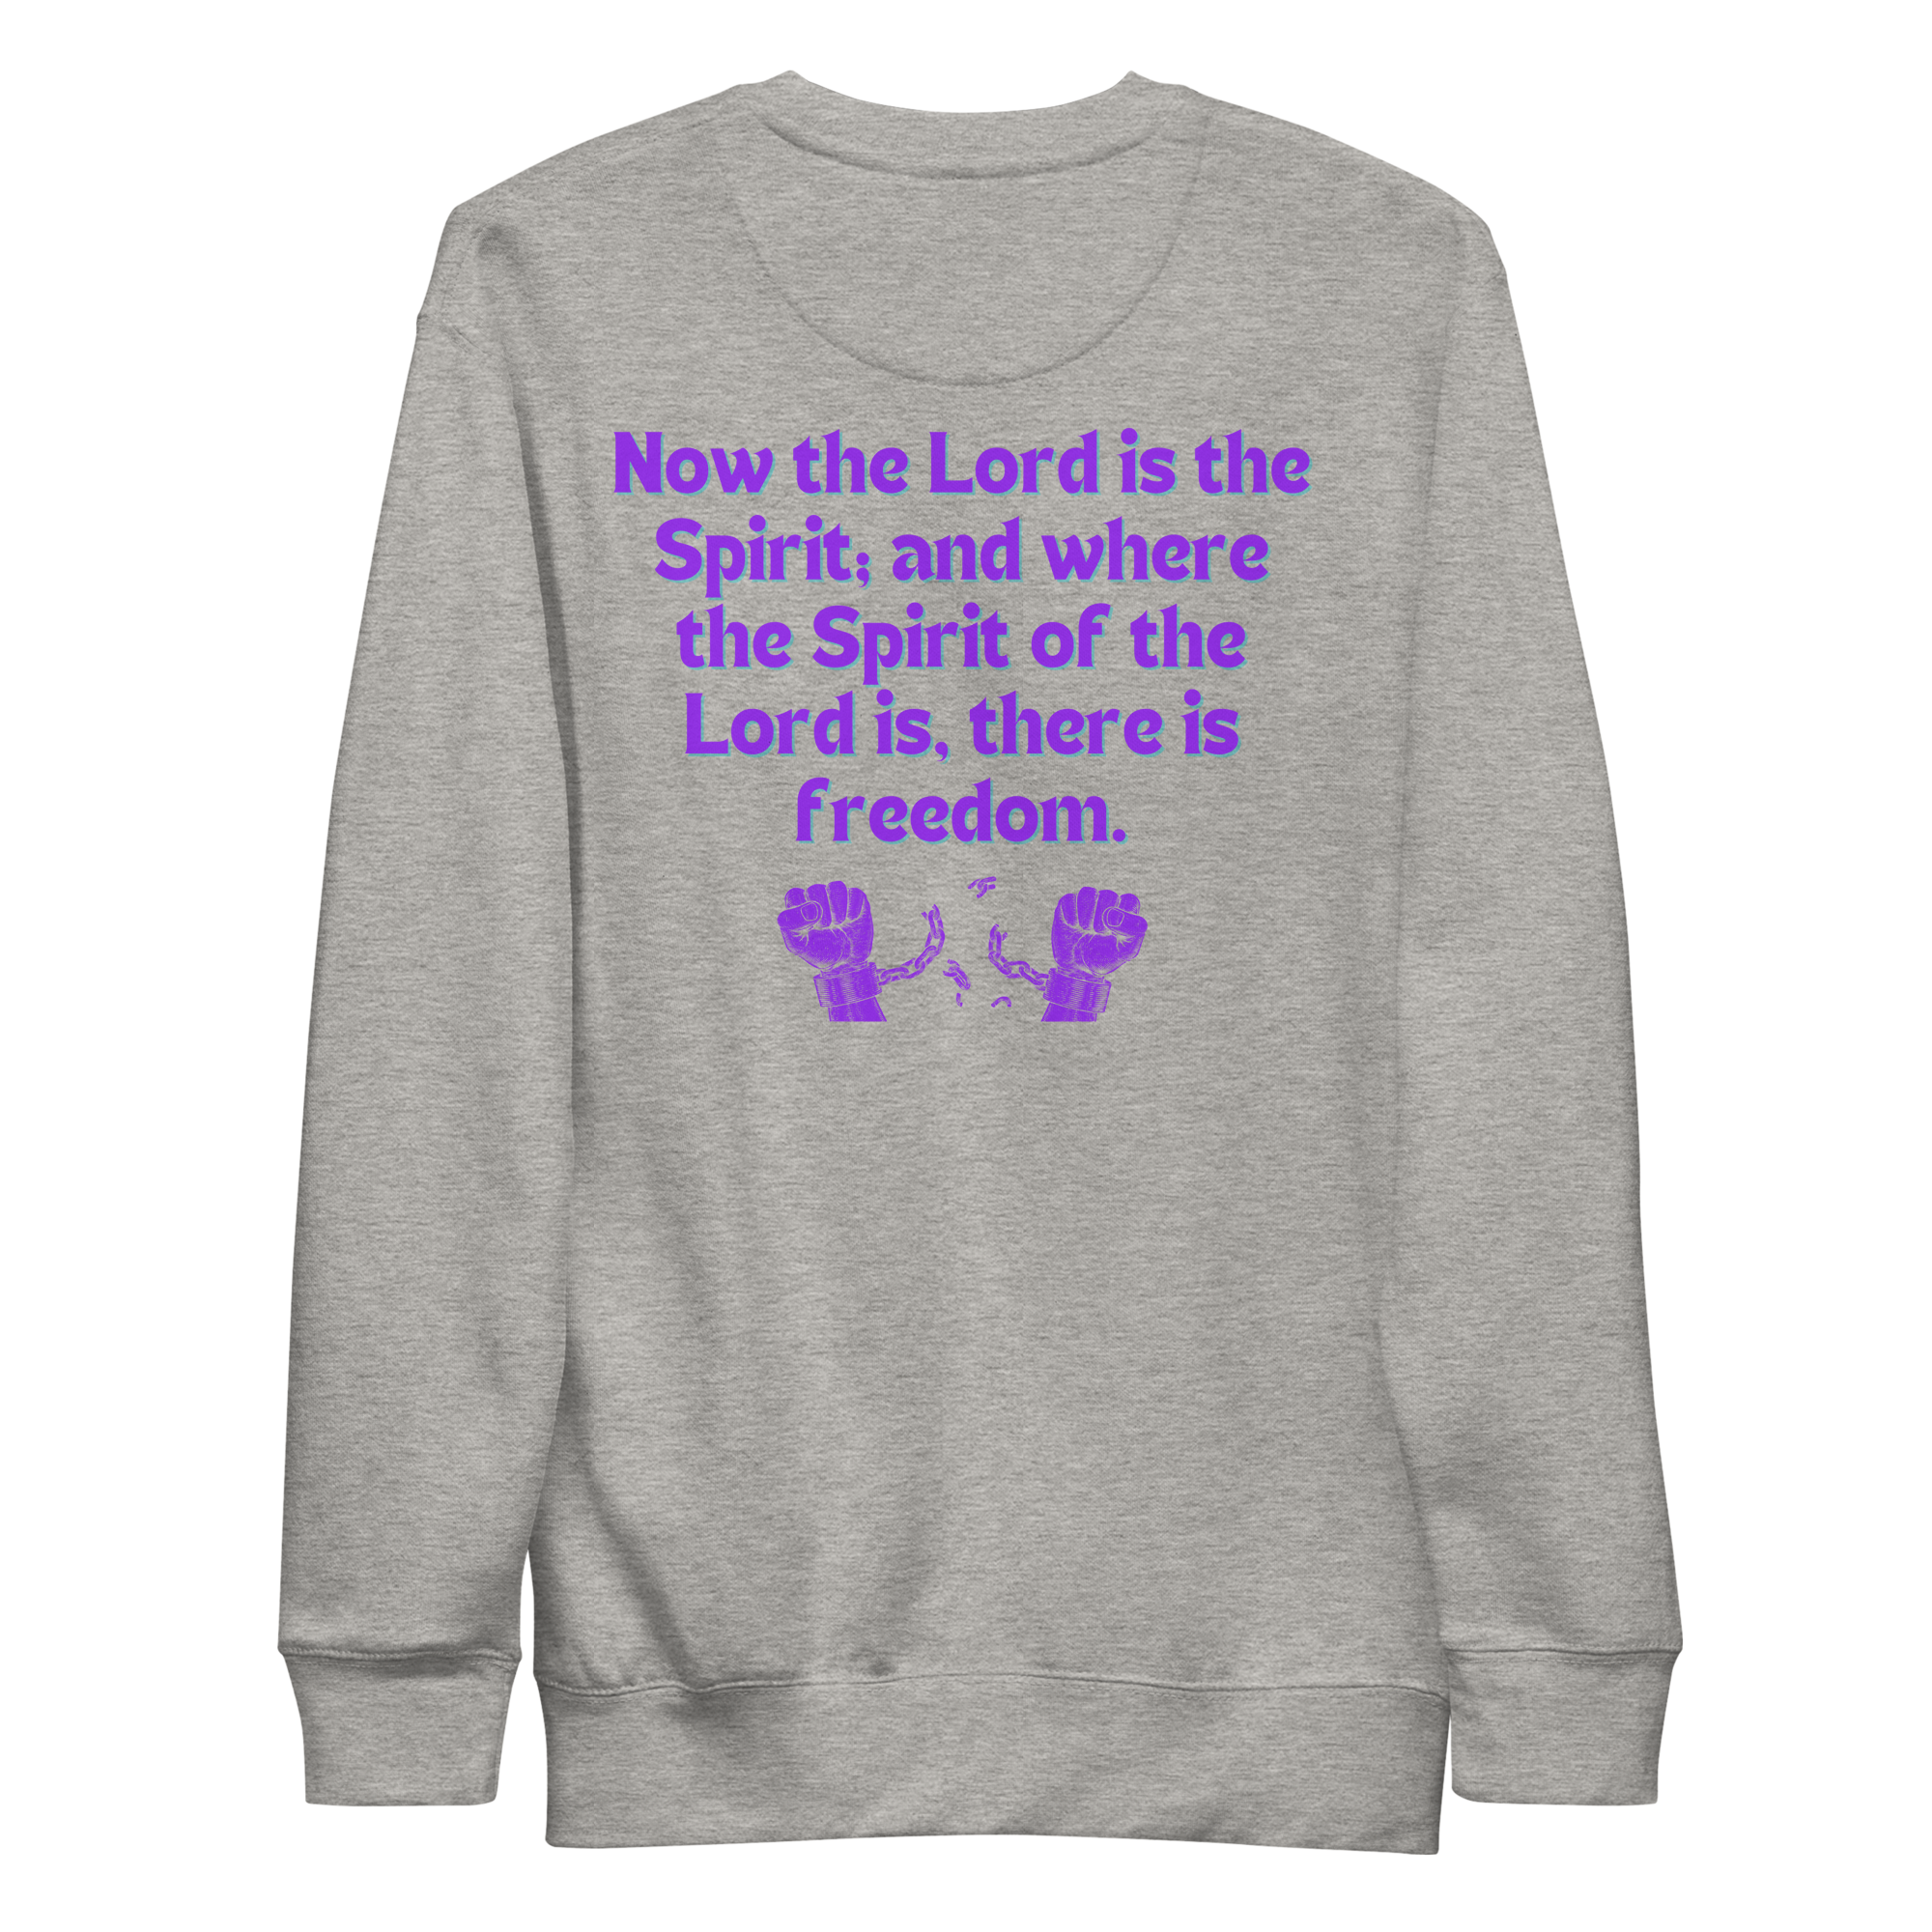 Preach Jesus is LORD Unisex Premium Sweatshirt